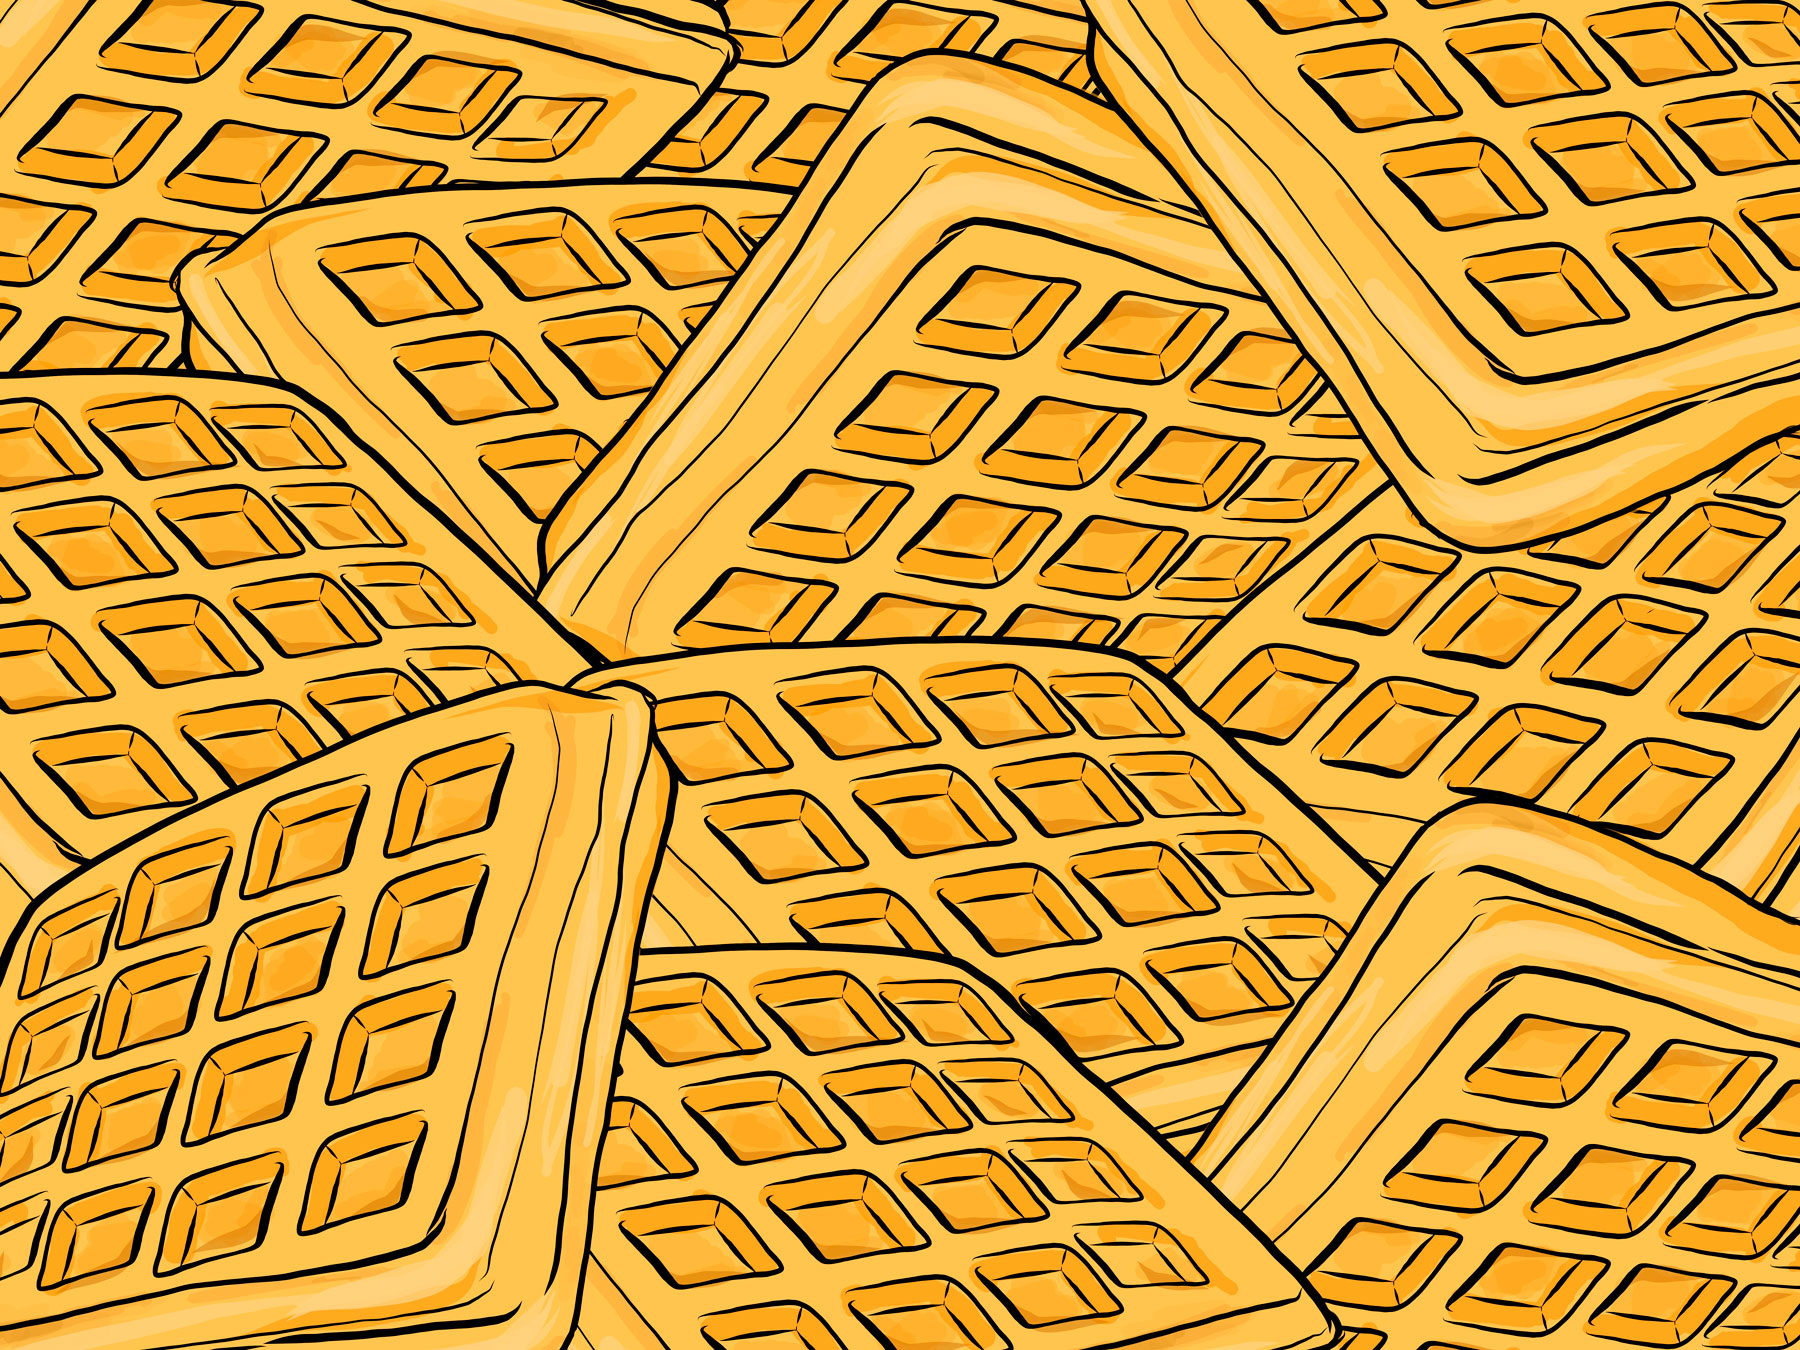 Waffles - Juna Lawrence - Brainoon - Friendmade.fm - digital food art illustration - pop art inspired